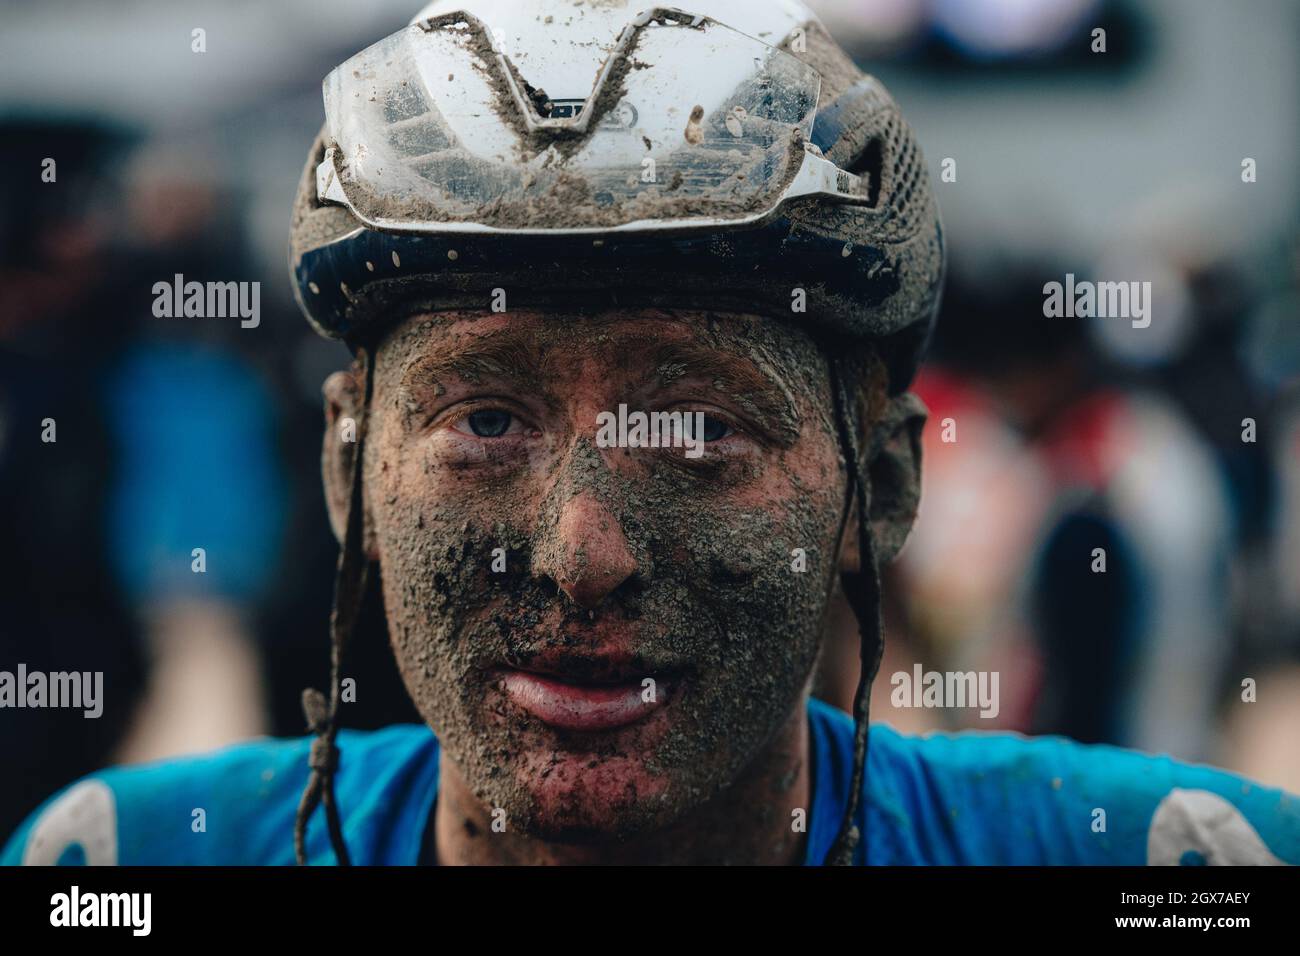 3rd October 2021, Paris&#x2013;Roubaix Mens Cycling tour; which is famous for its uneven cobblestone course. Stock Photo